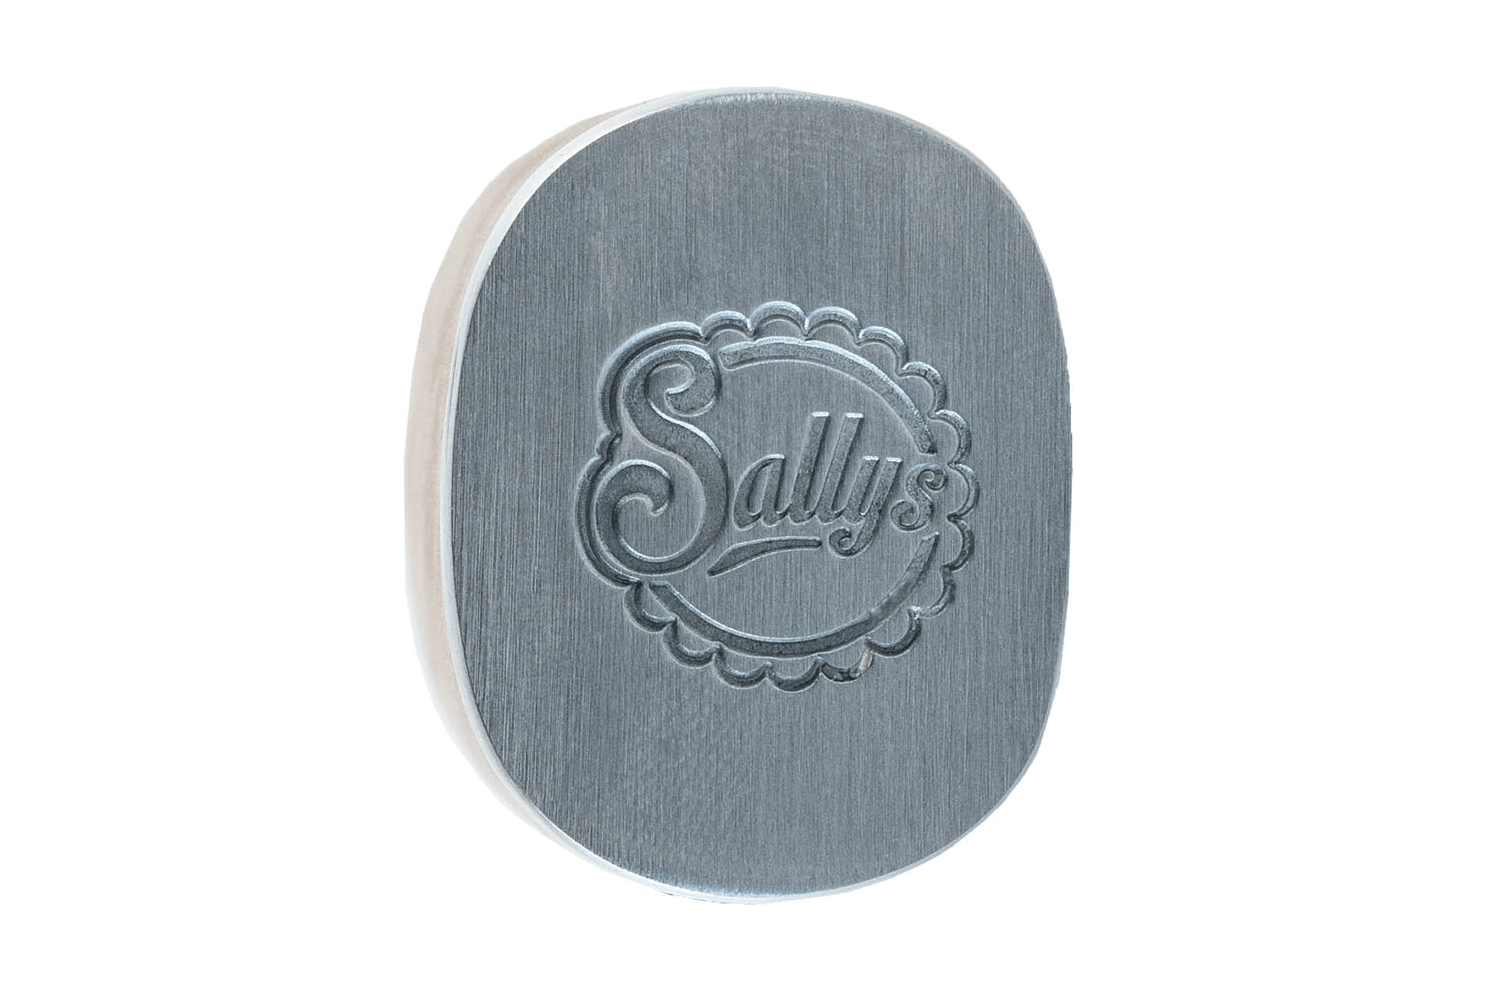 Das Sallys-Logo auf dem Griff des Masuta Messers